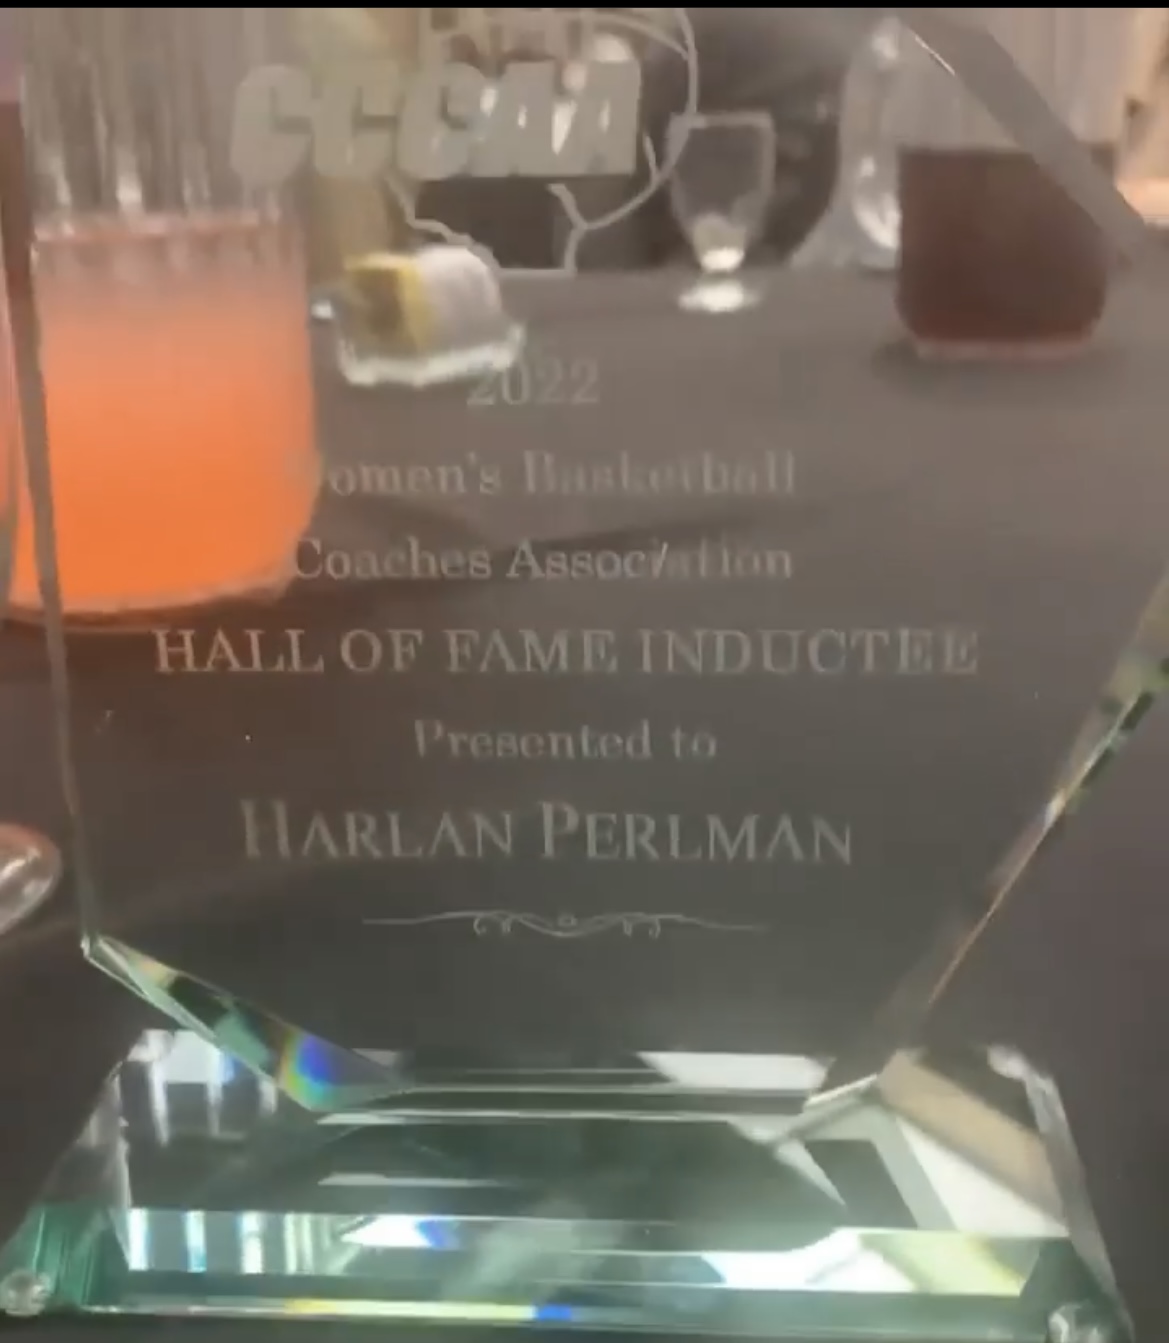 Harlan Perlman CCCWBCA Award plaque.